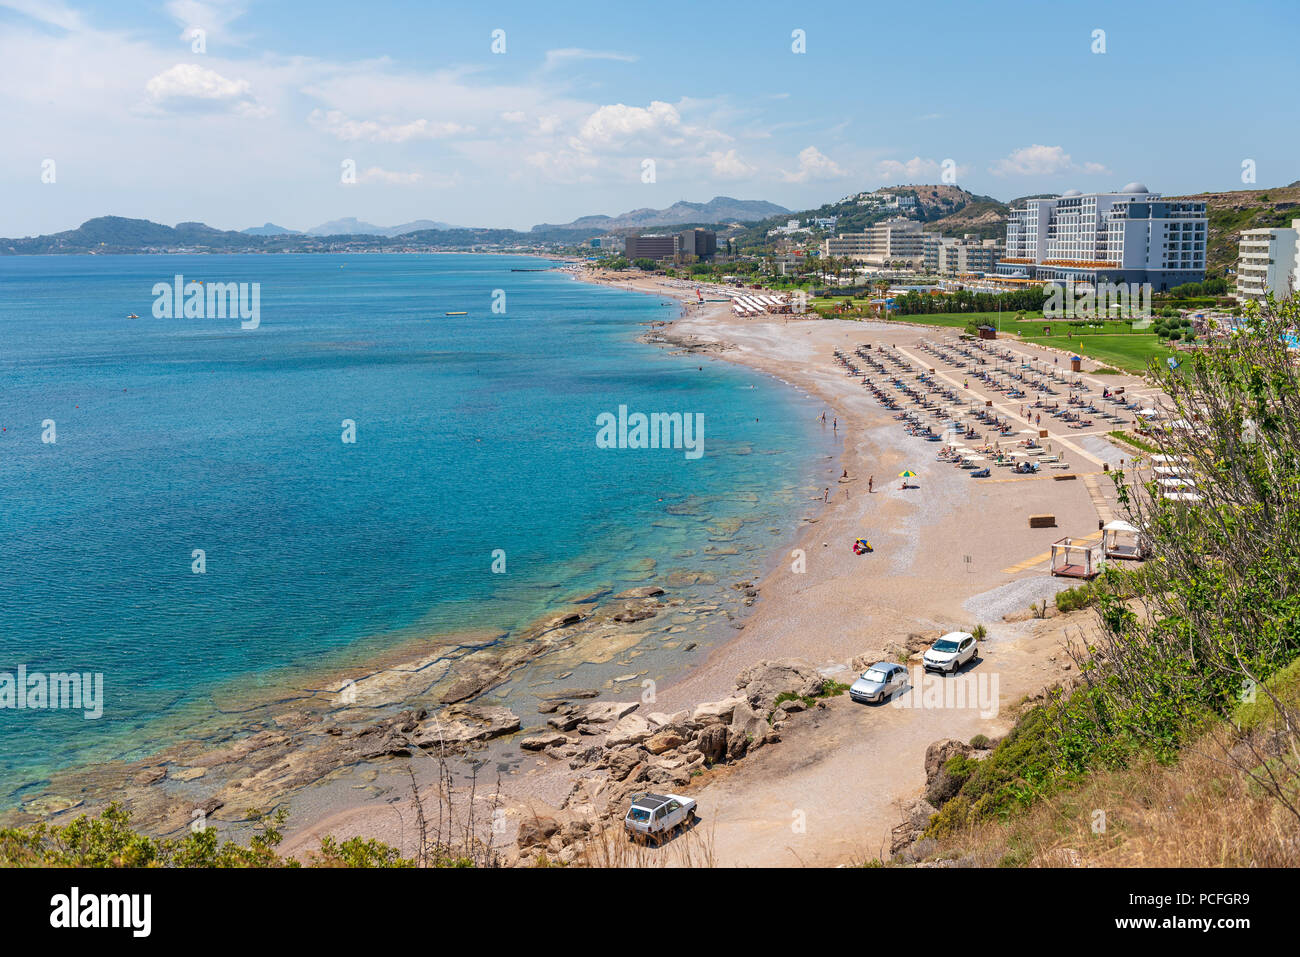 View of bay with sandy beach in Faliraki. Rhodes island, Dodecanese, Greece. Stock Photo